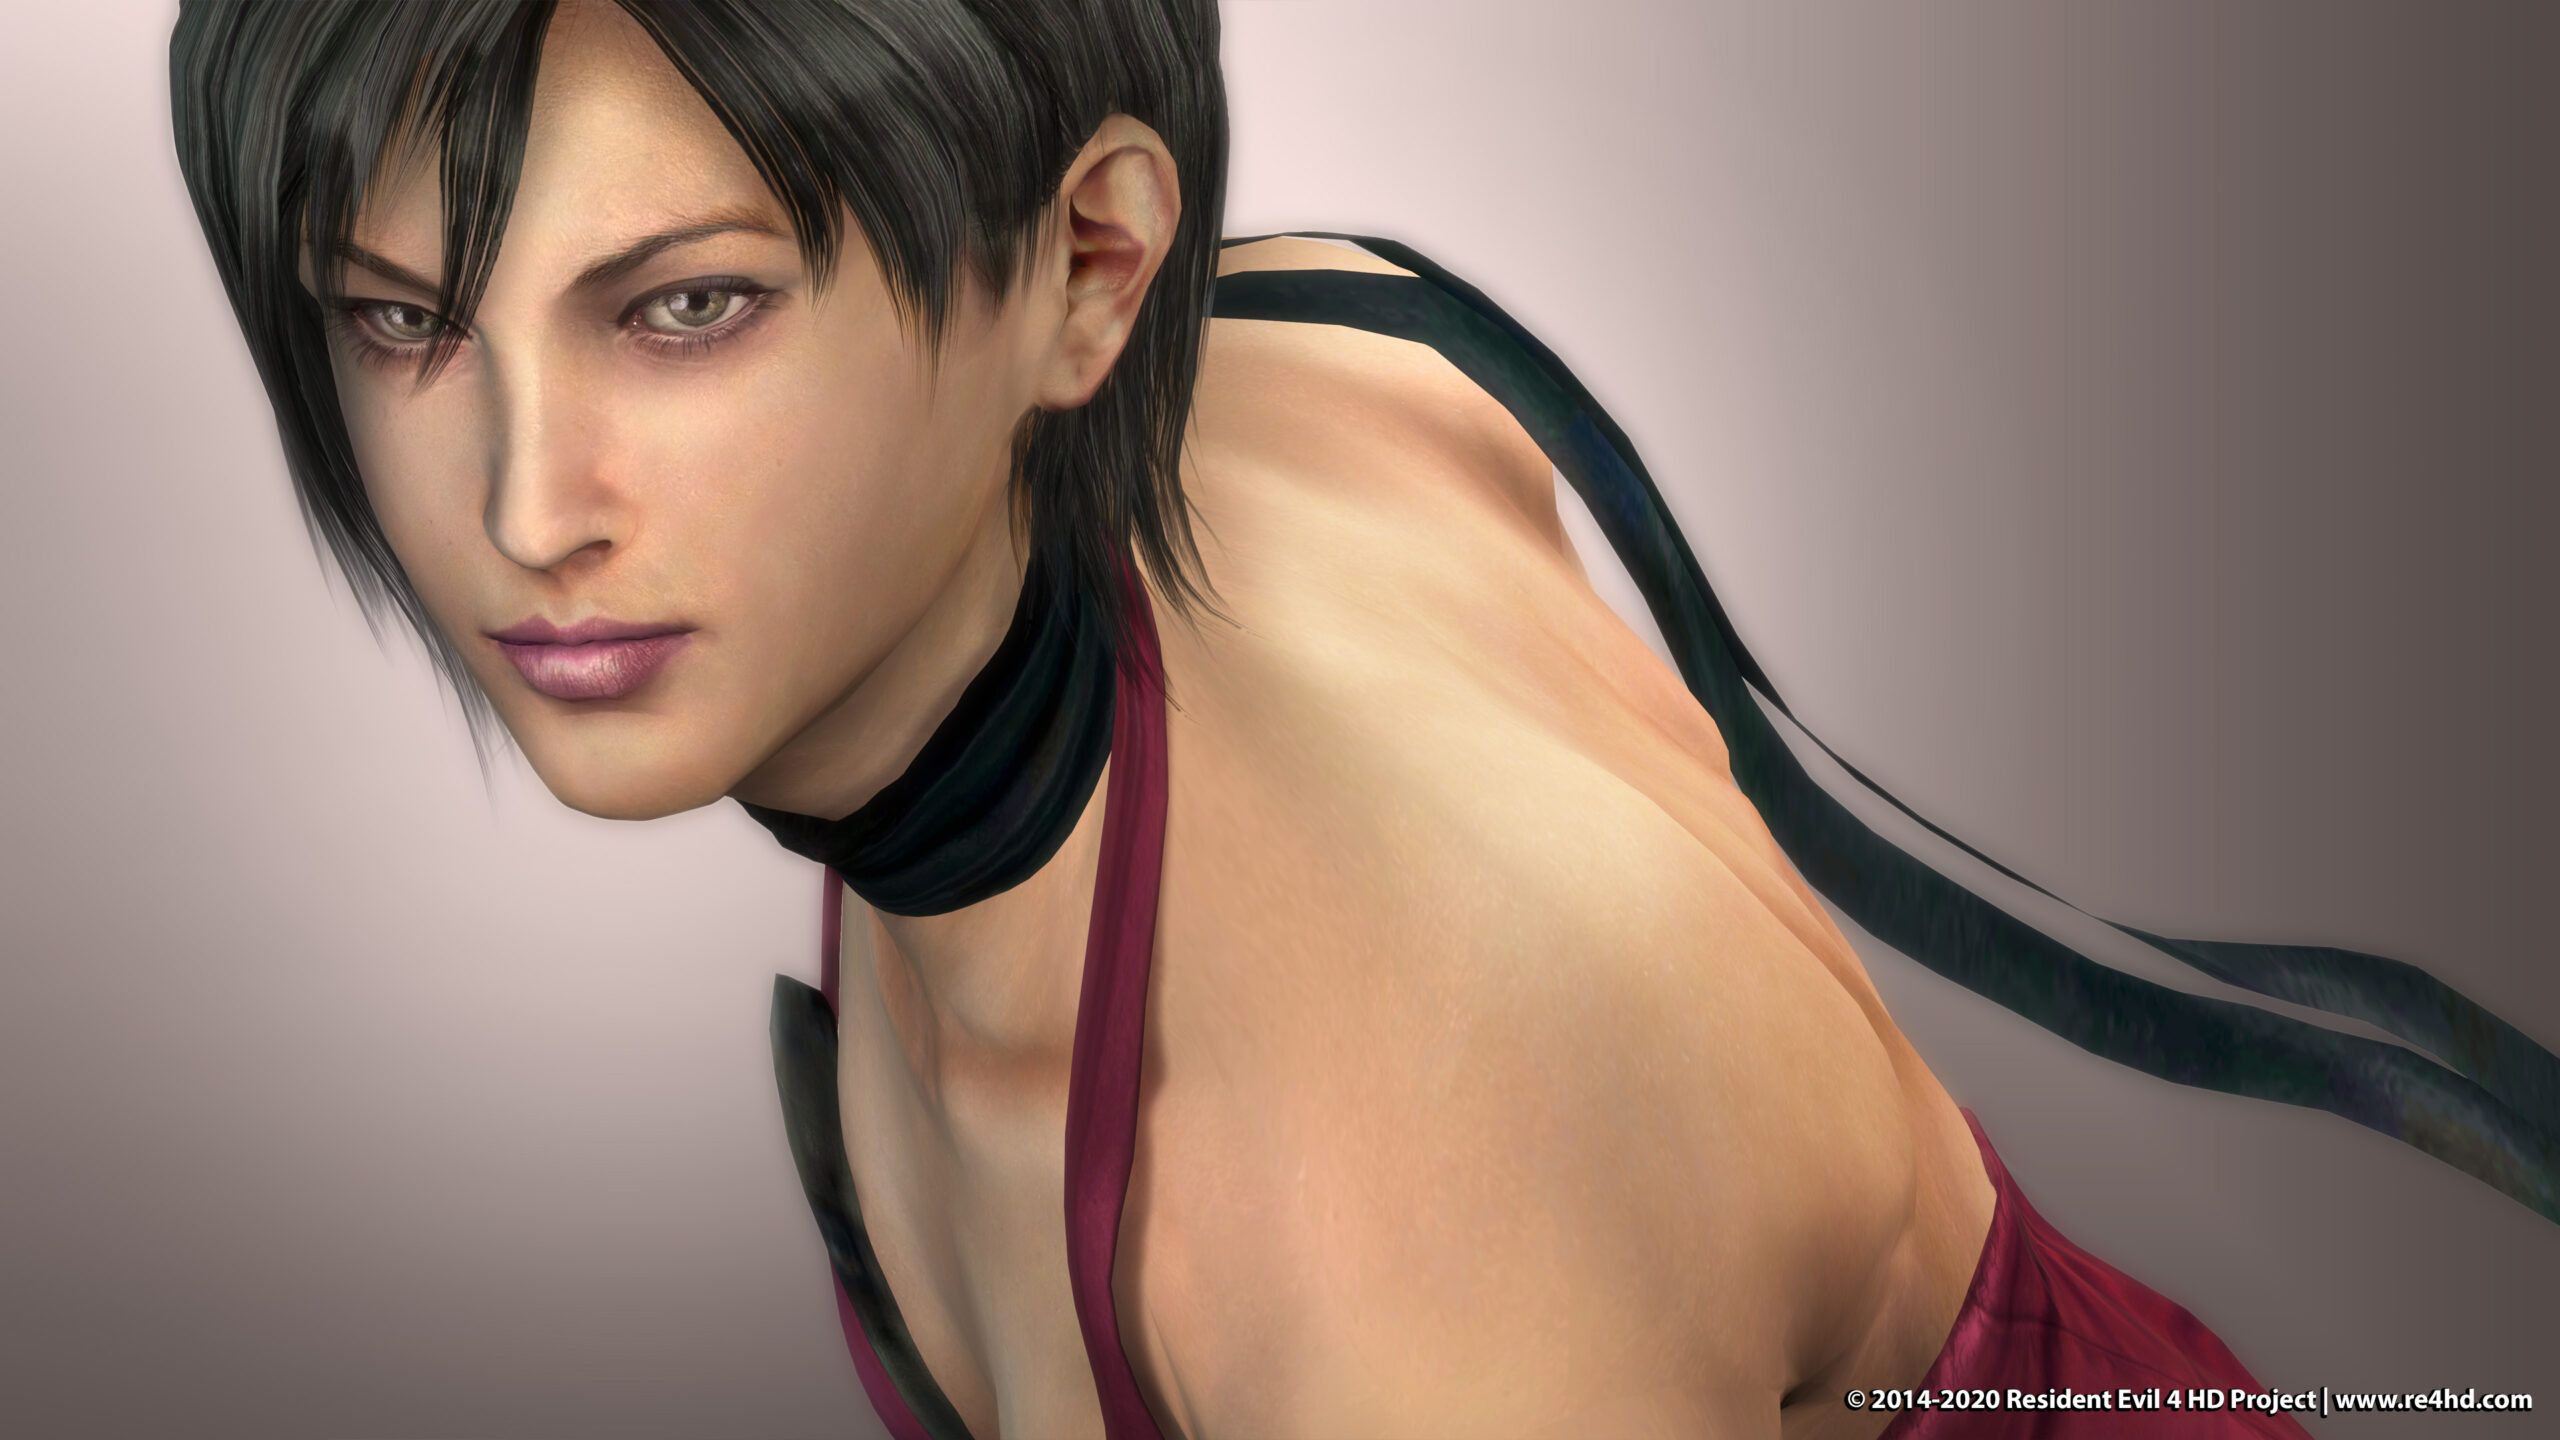 Resident Evil 4 HD Project Ada Wong. REVIL